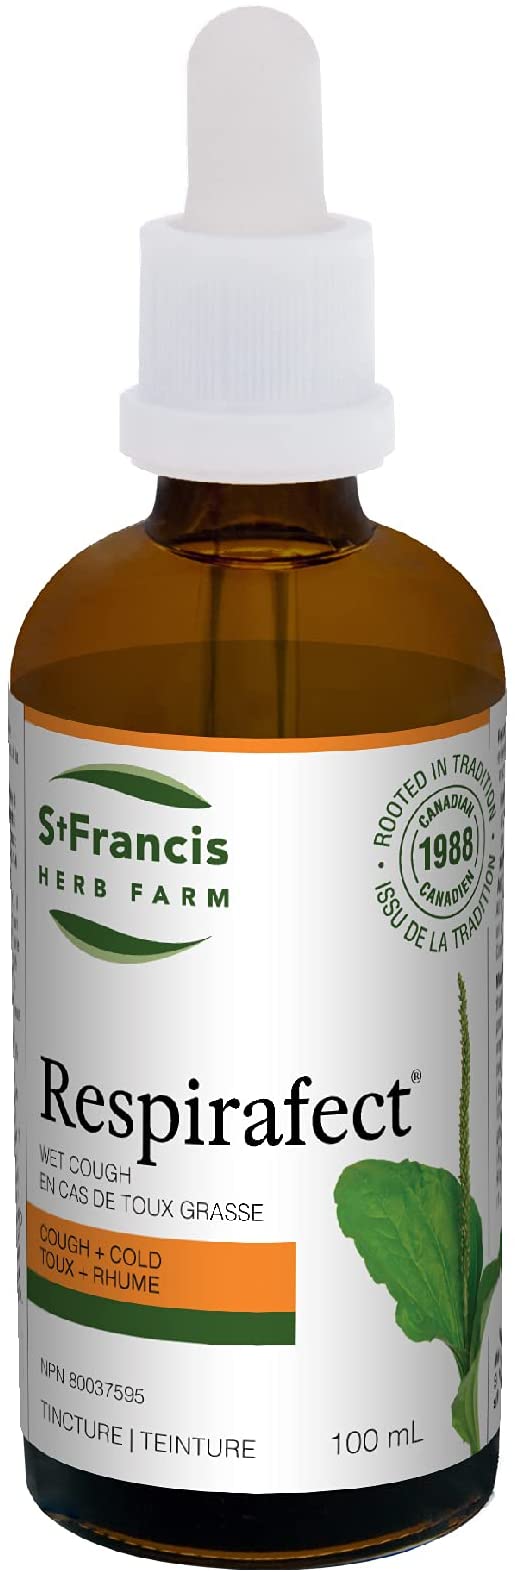 St Francis Herb Farm Respirafect Wet Cough Tincture Image 2